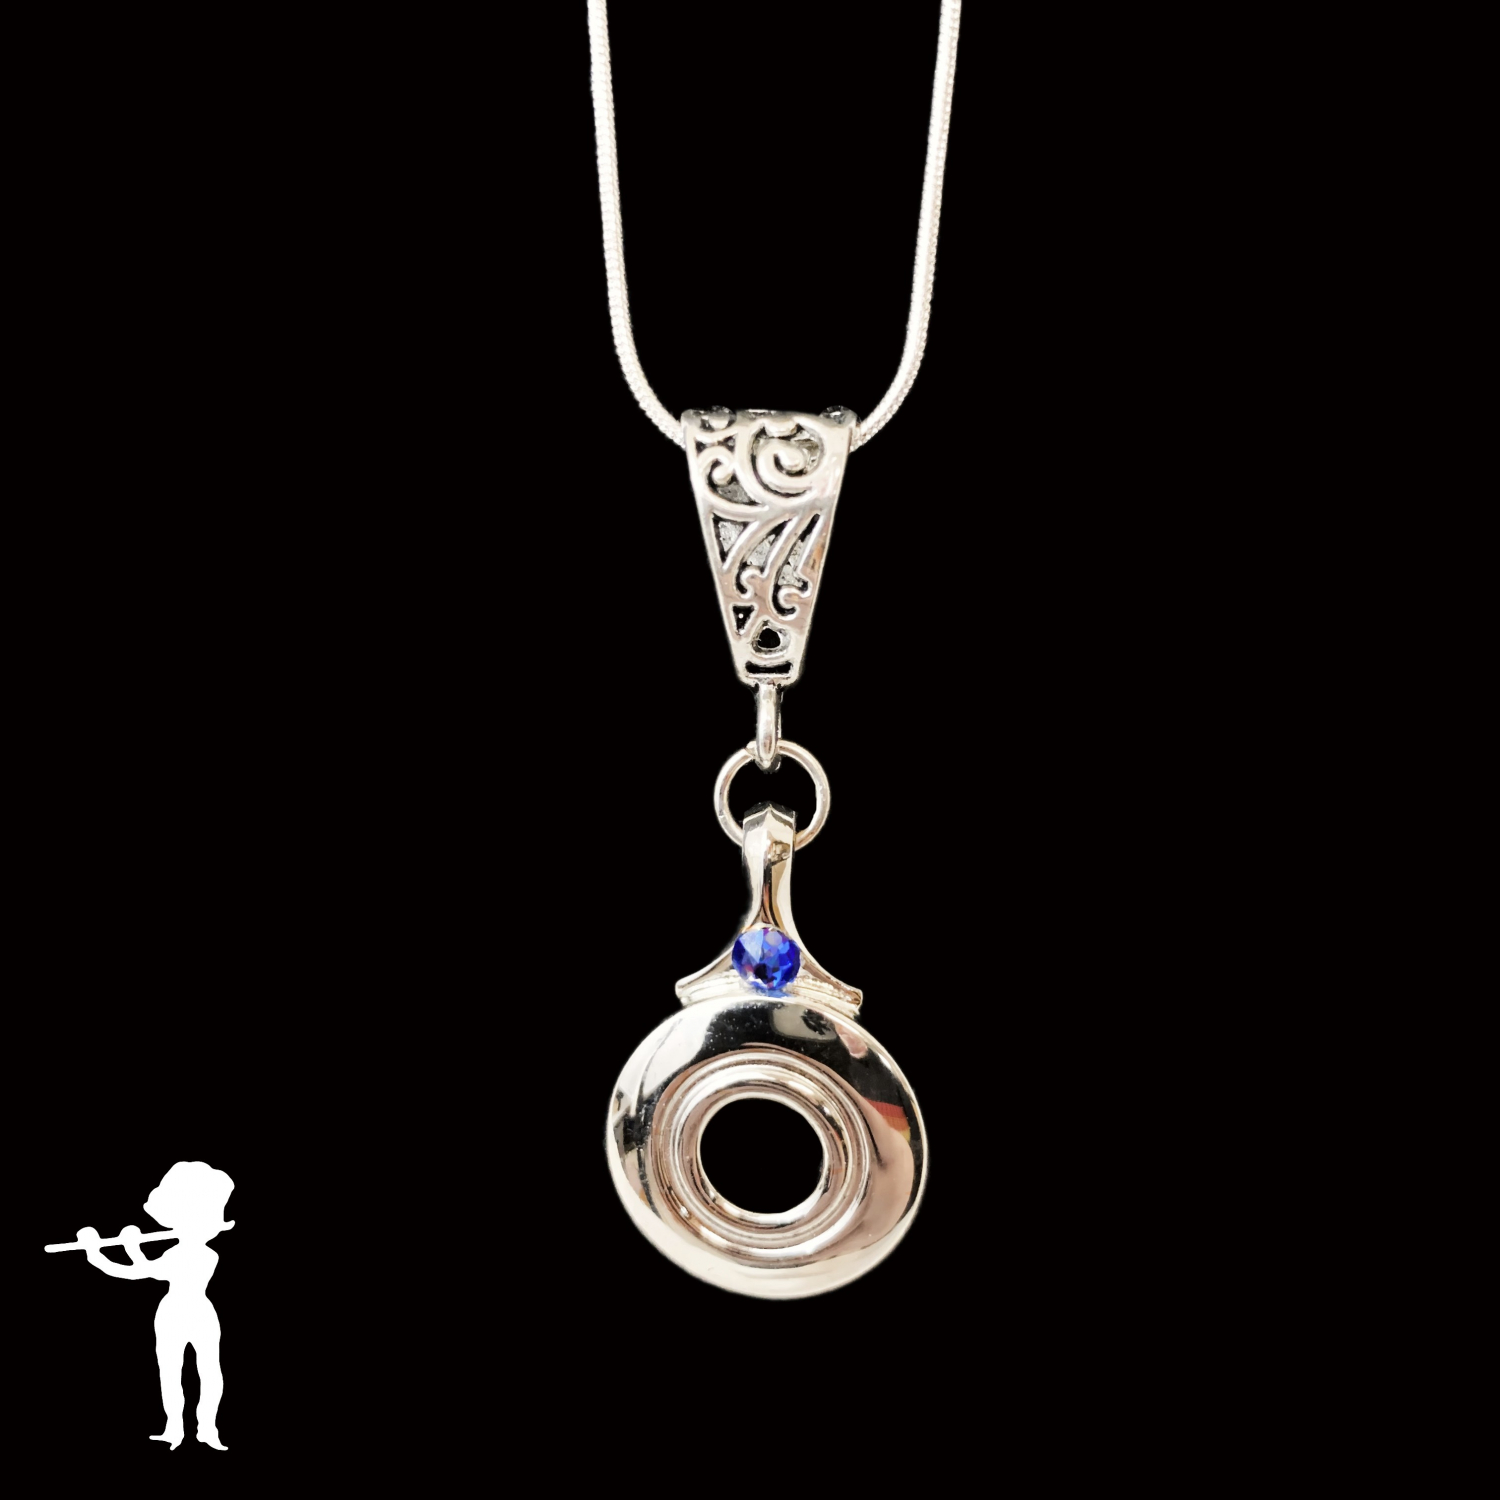 Necklace - Open Hole Key with Tiny Neck Crystal